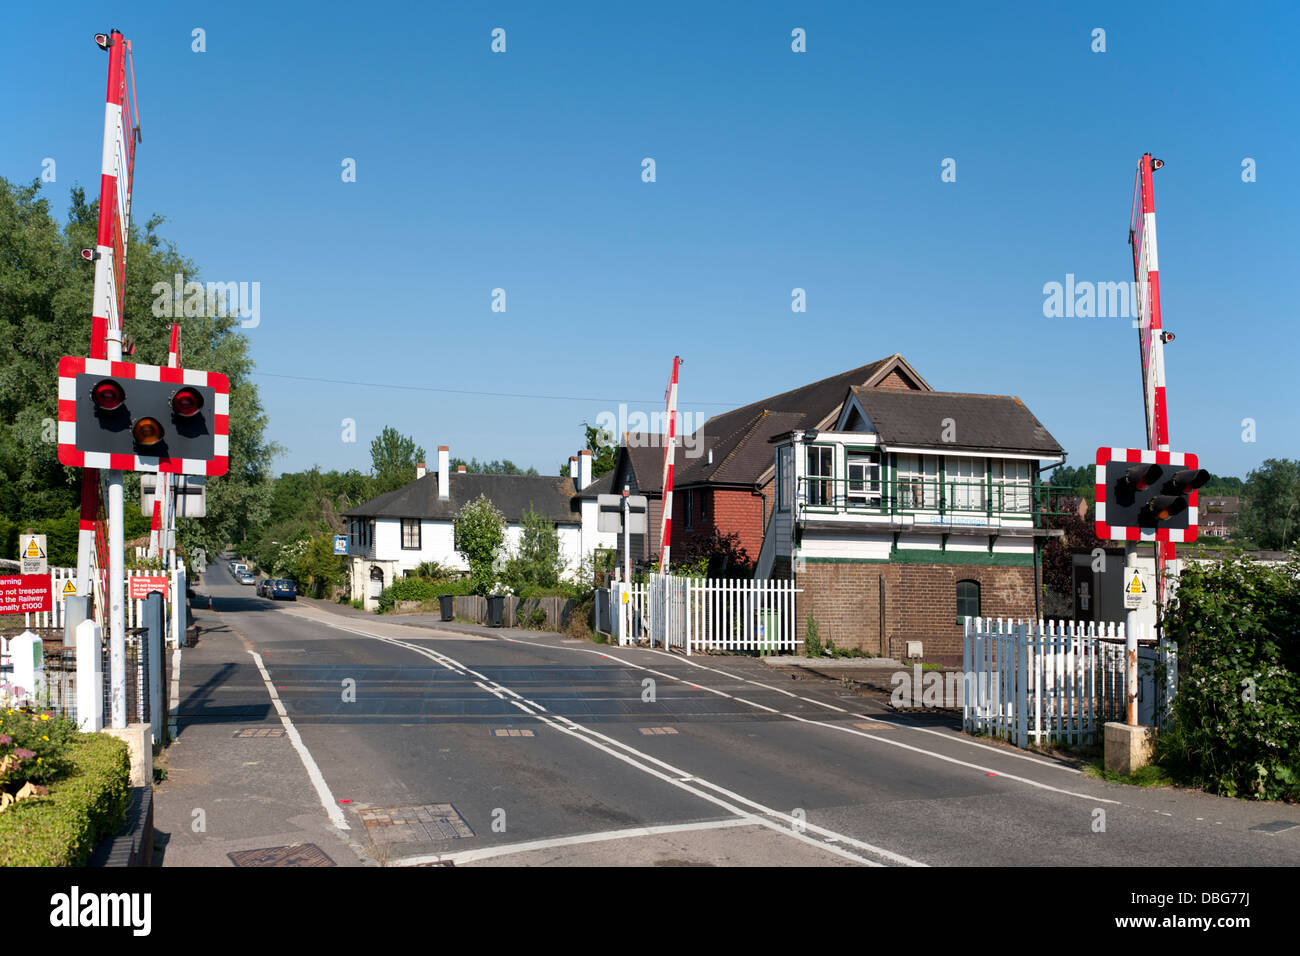 Robertsbridge railway road crossing and signalbox, East Sussex, UK Stock Photo